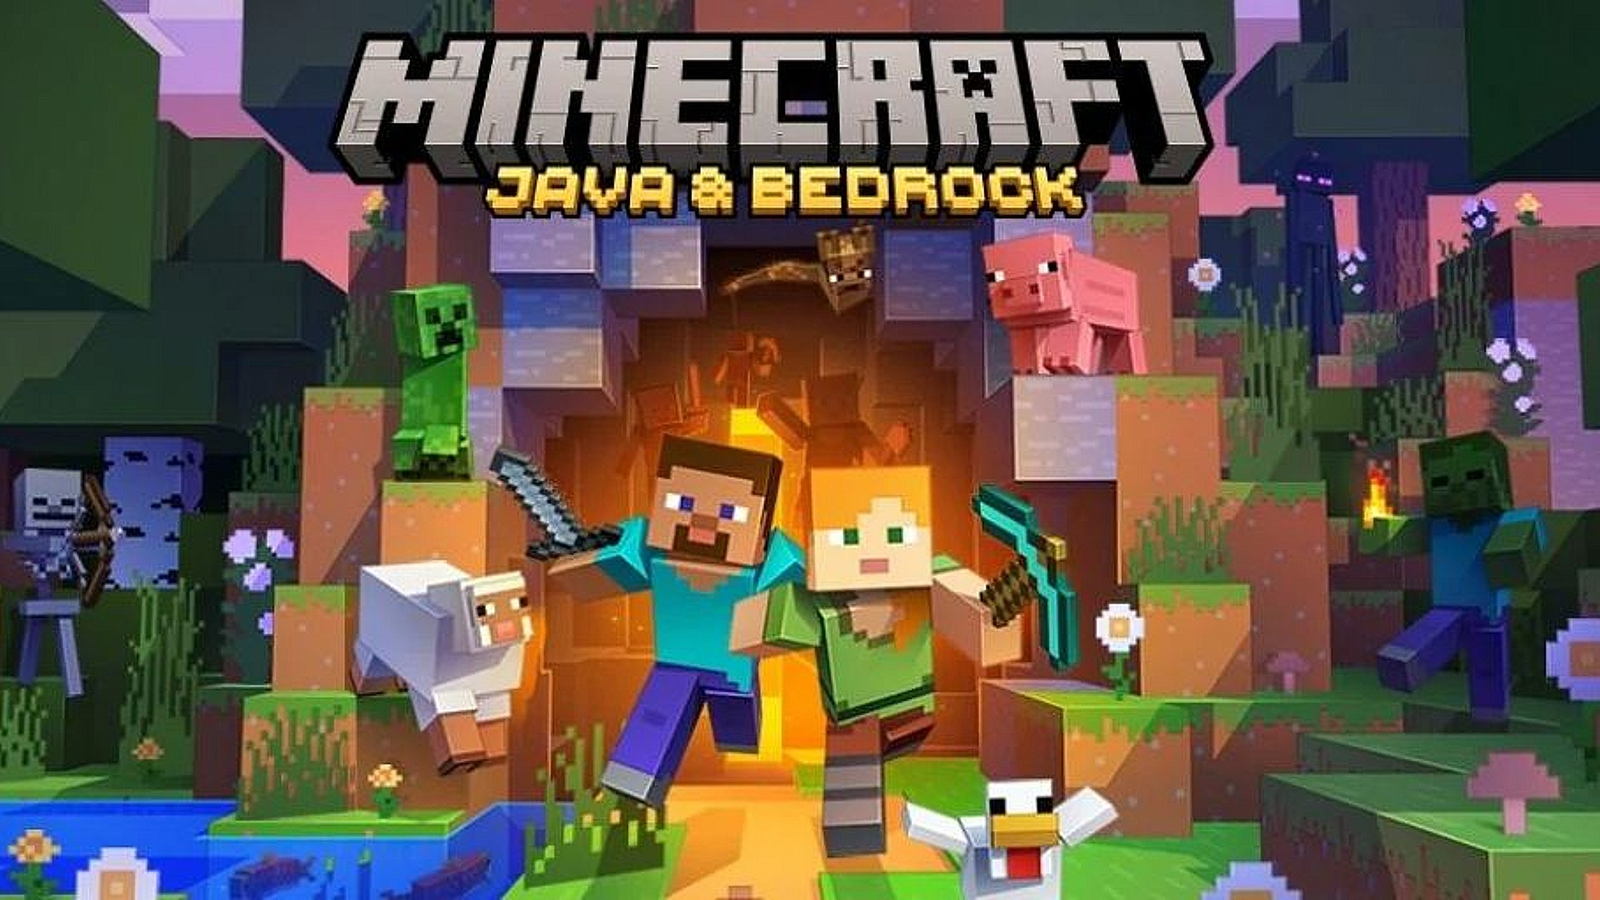 How to turn Minecraft Bedrock Edition into Minecraft Java Edition